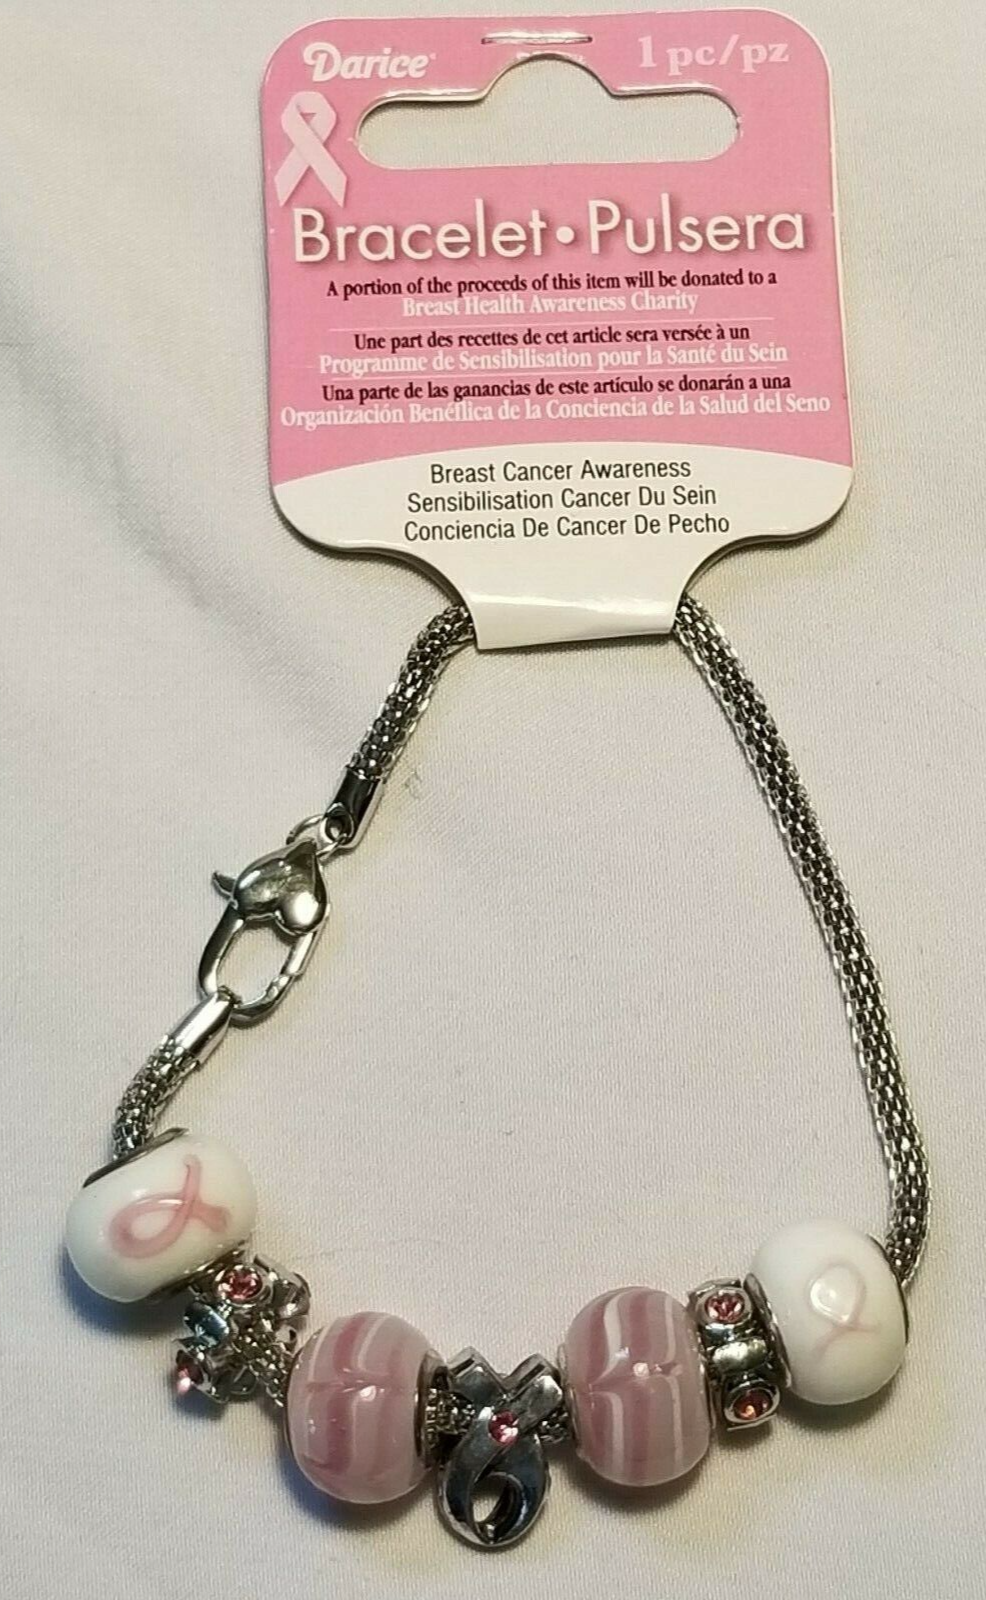 New Darice Breast Cancer Awareness Bracelet - Bracelet and Beads Set - $10.77